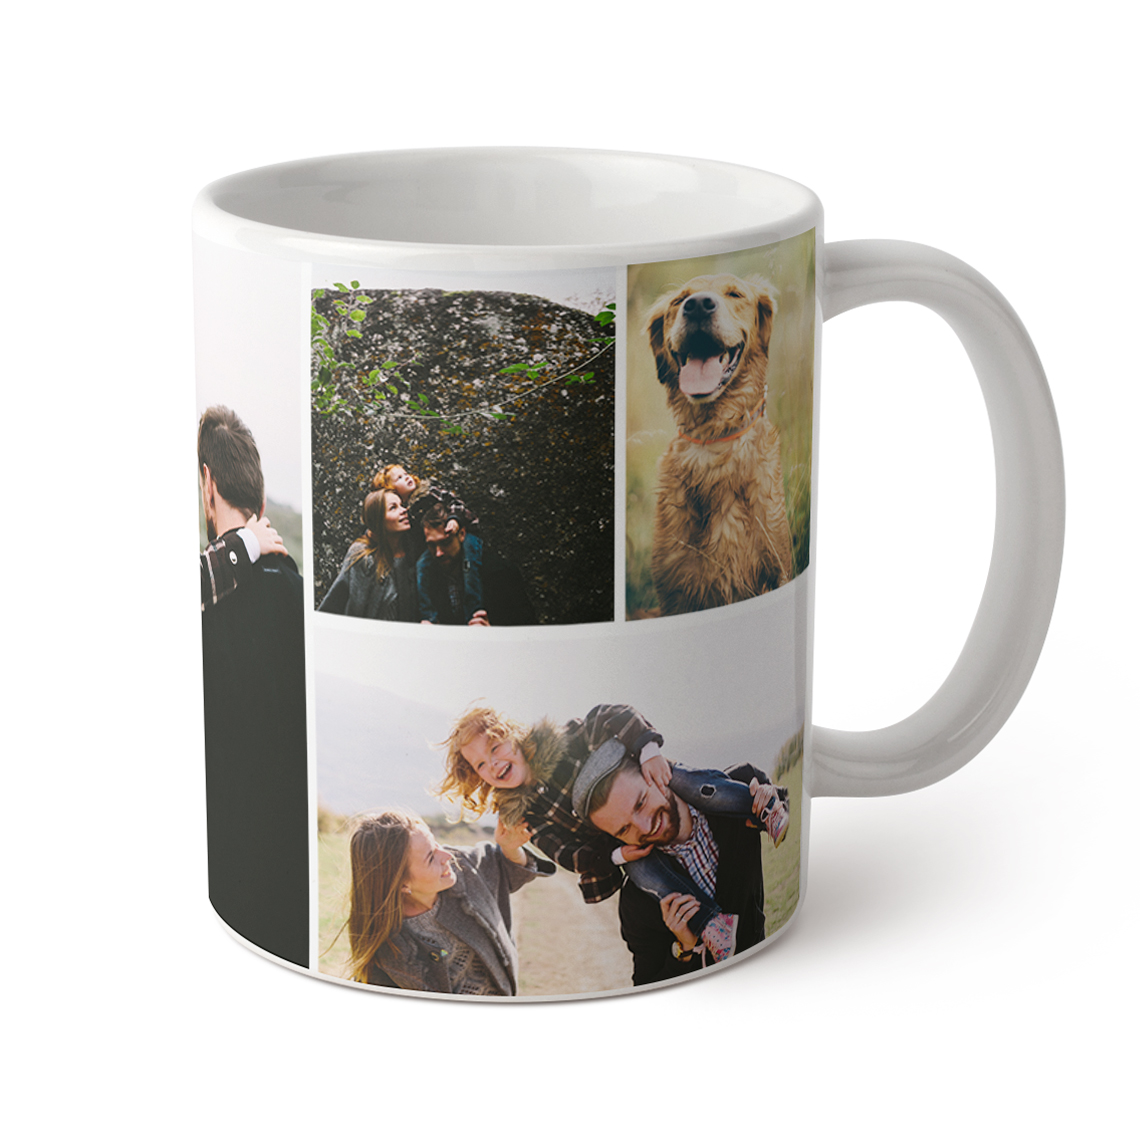 Create Photo Collage Grande Coffee Mug, Personalized Mug